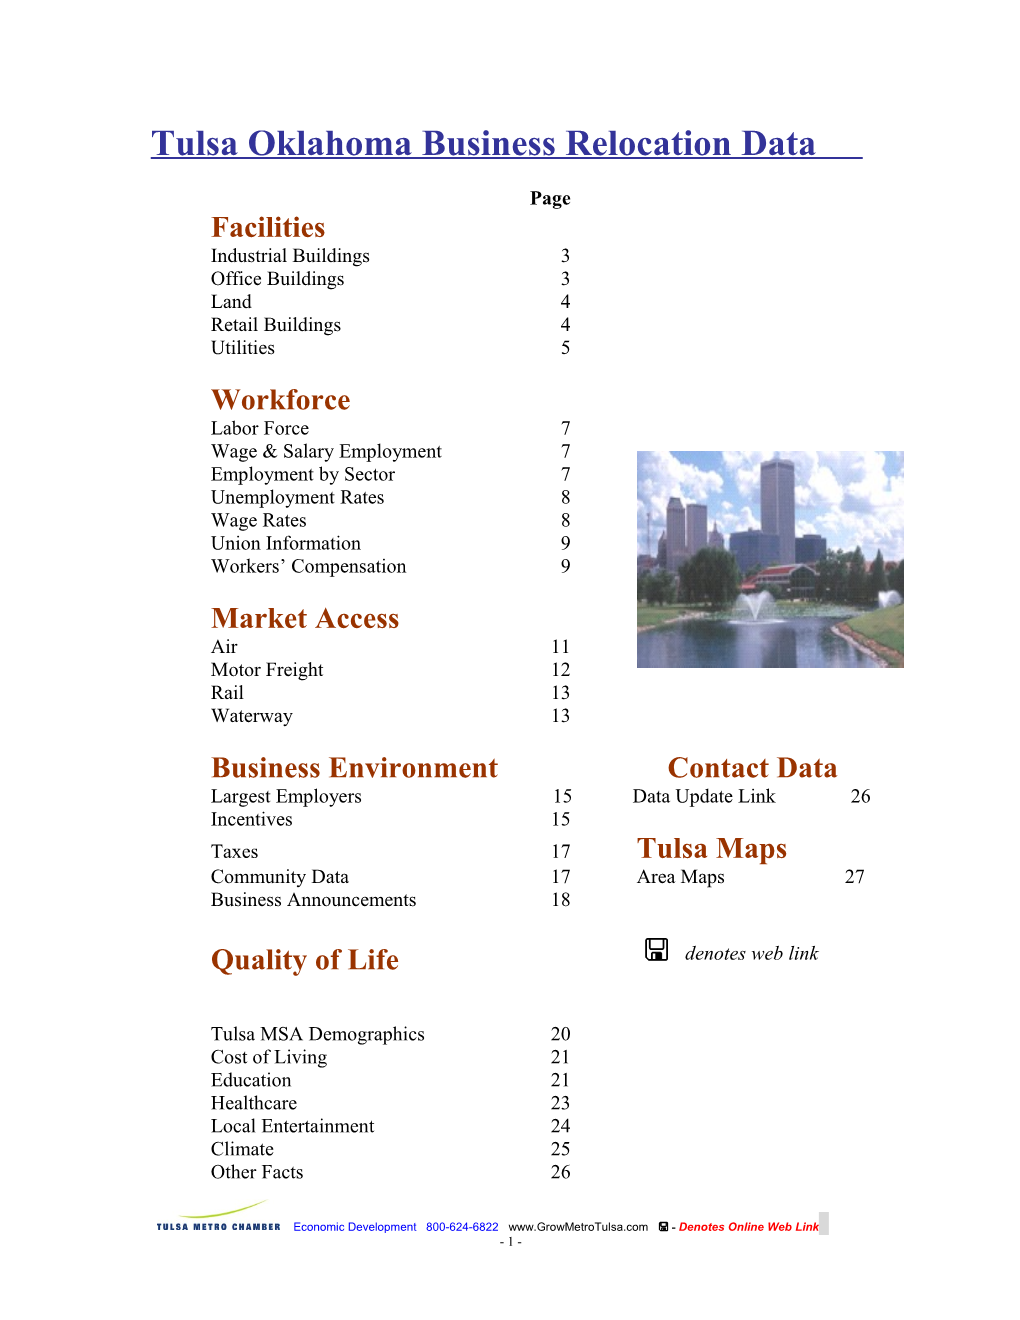 Tulsa Business Relocation Data s1